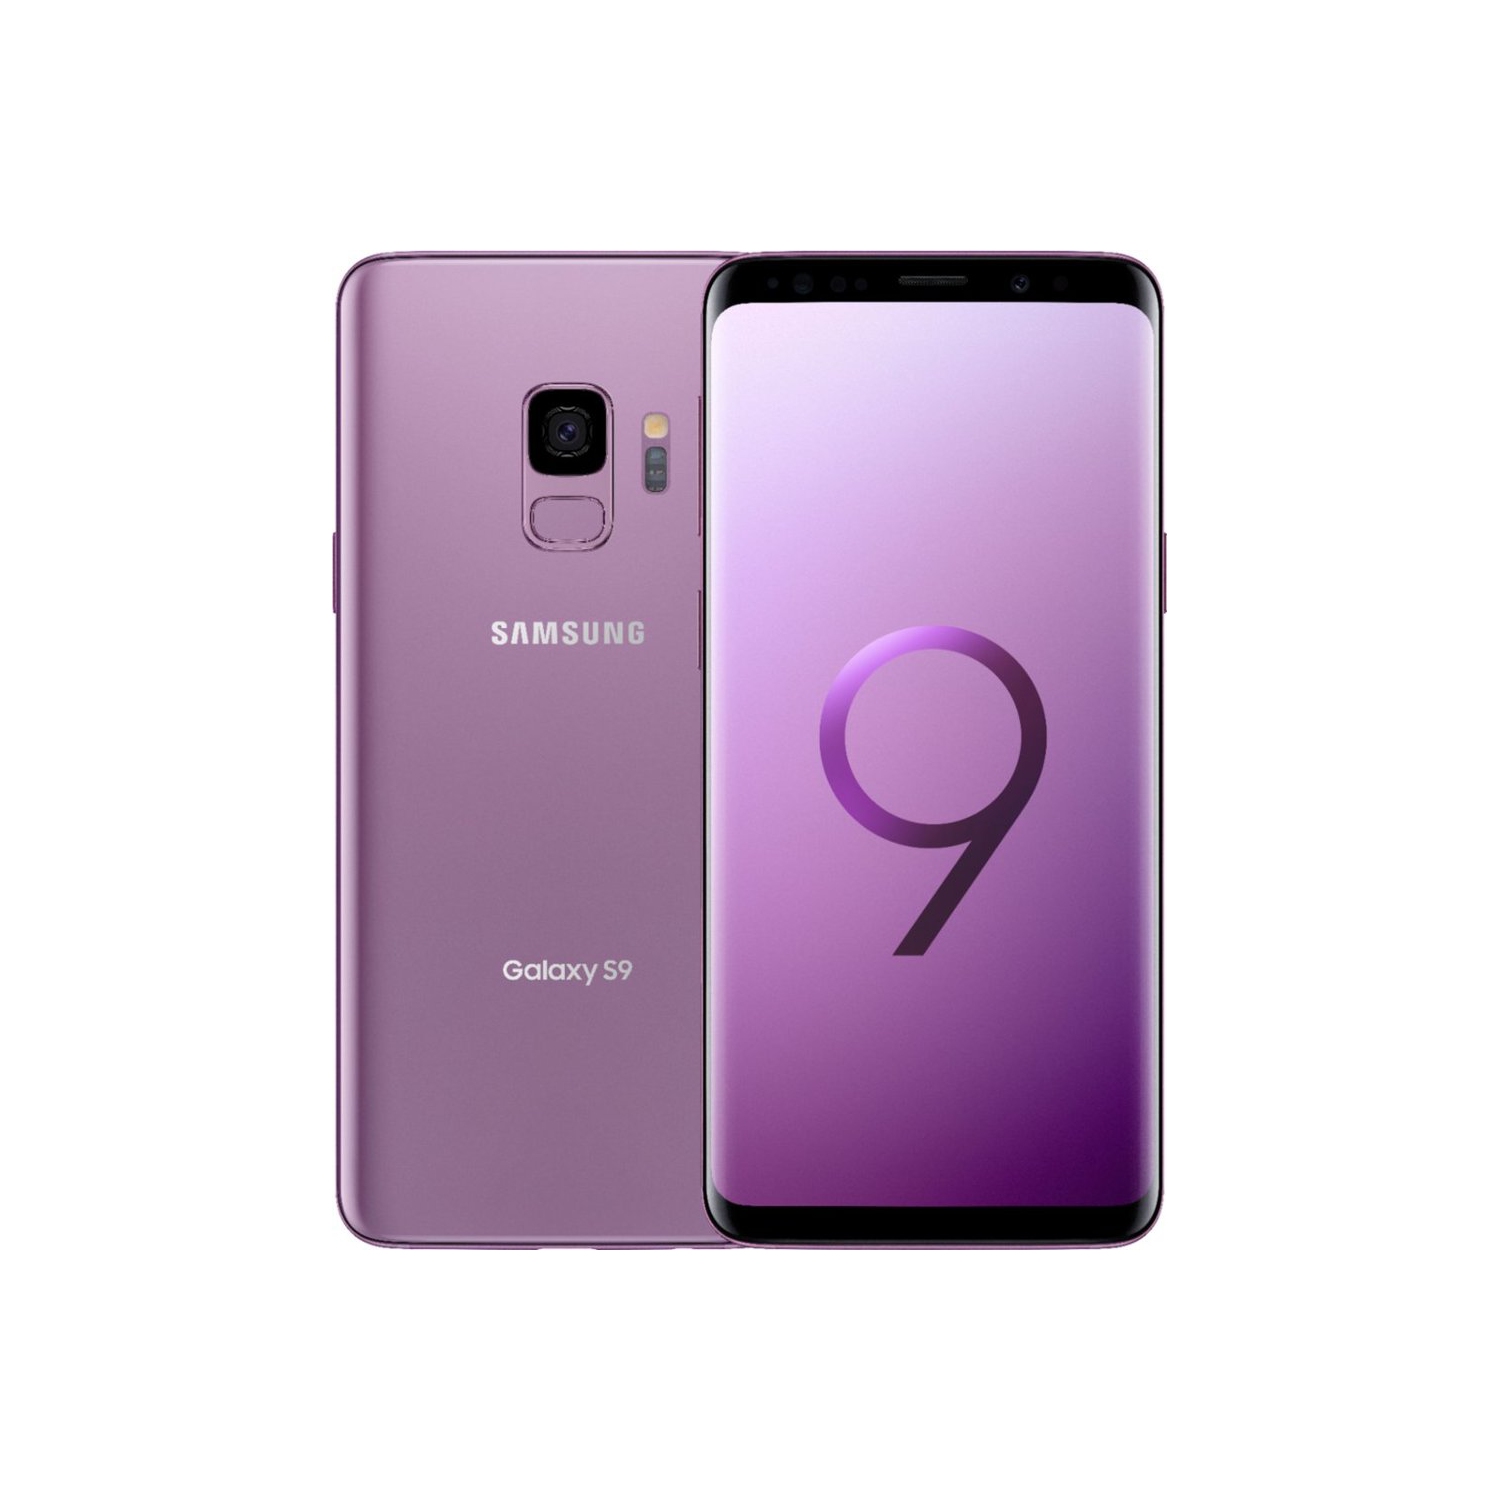 Samsung Galaxy S9 64GB Smartphone - Lilac Purple - Unlocked - Open Box